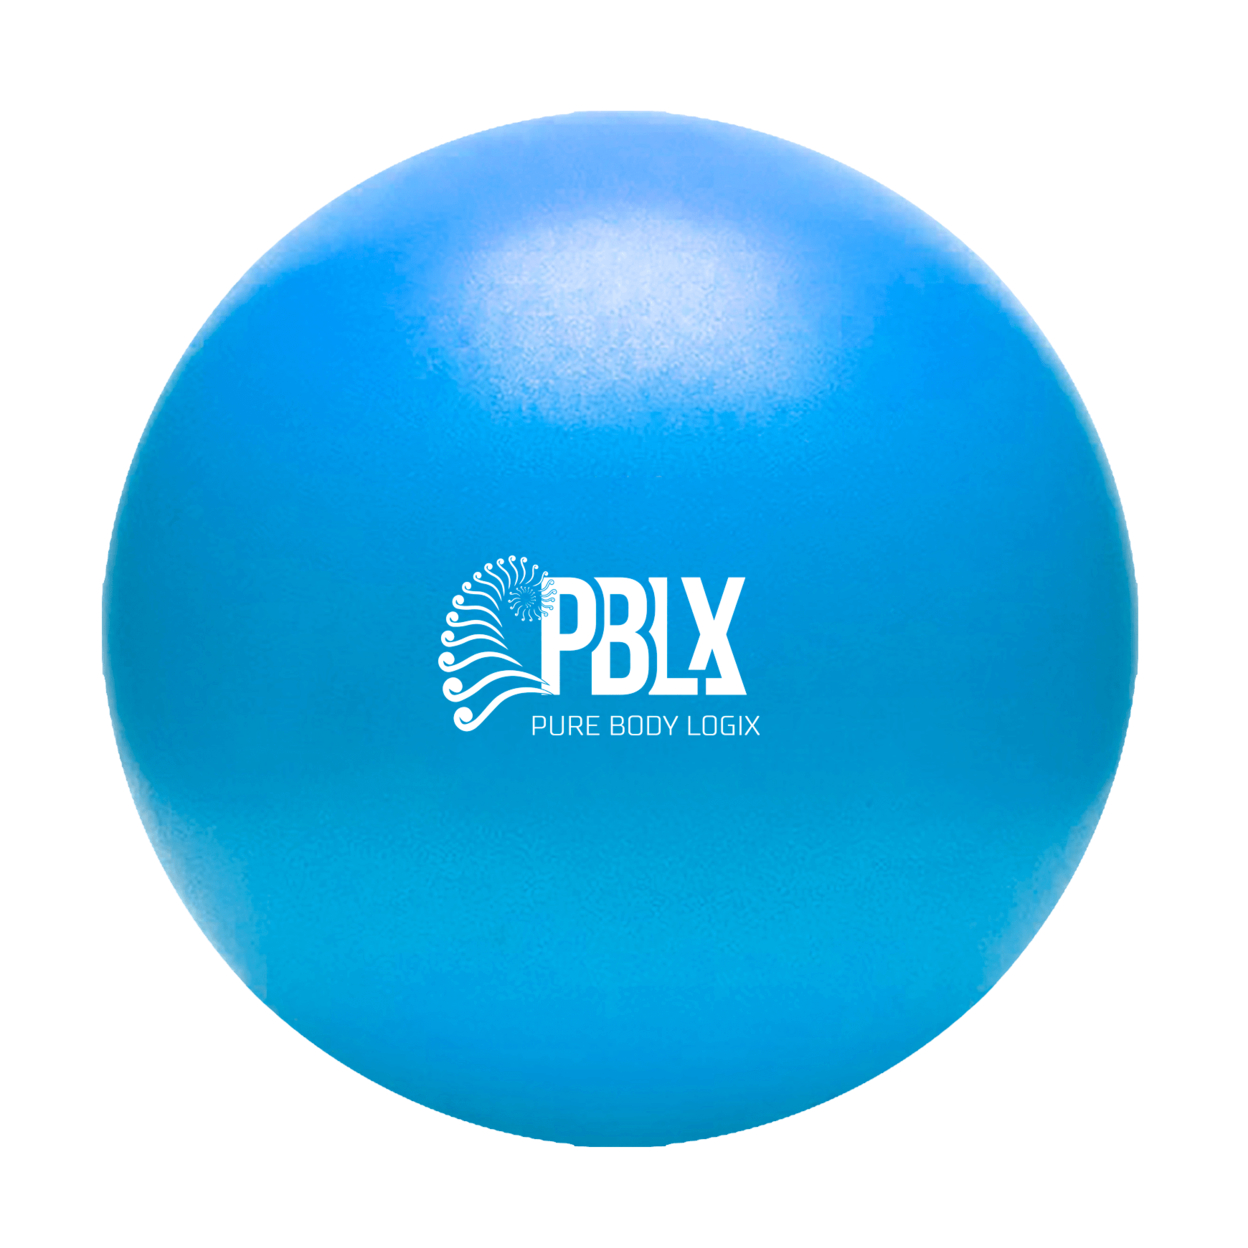 PBLX Yoga & Pilates Exercise Ball - Blue